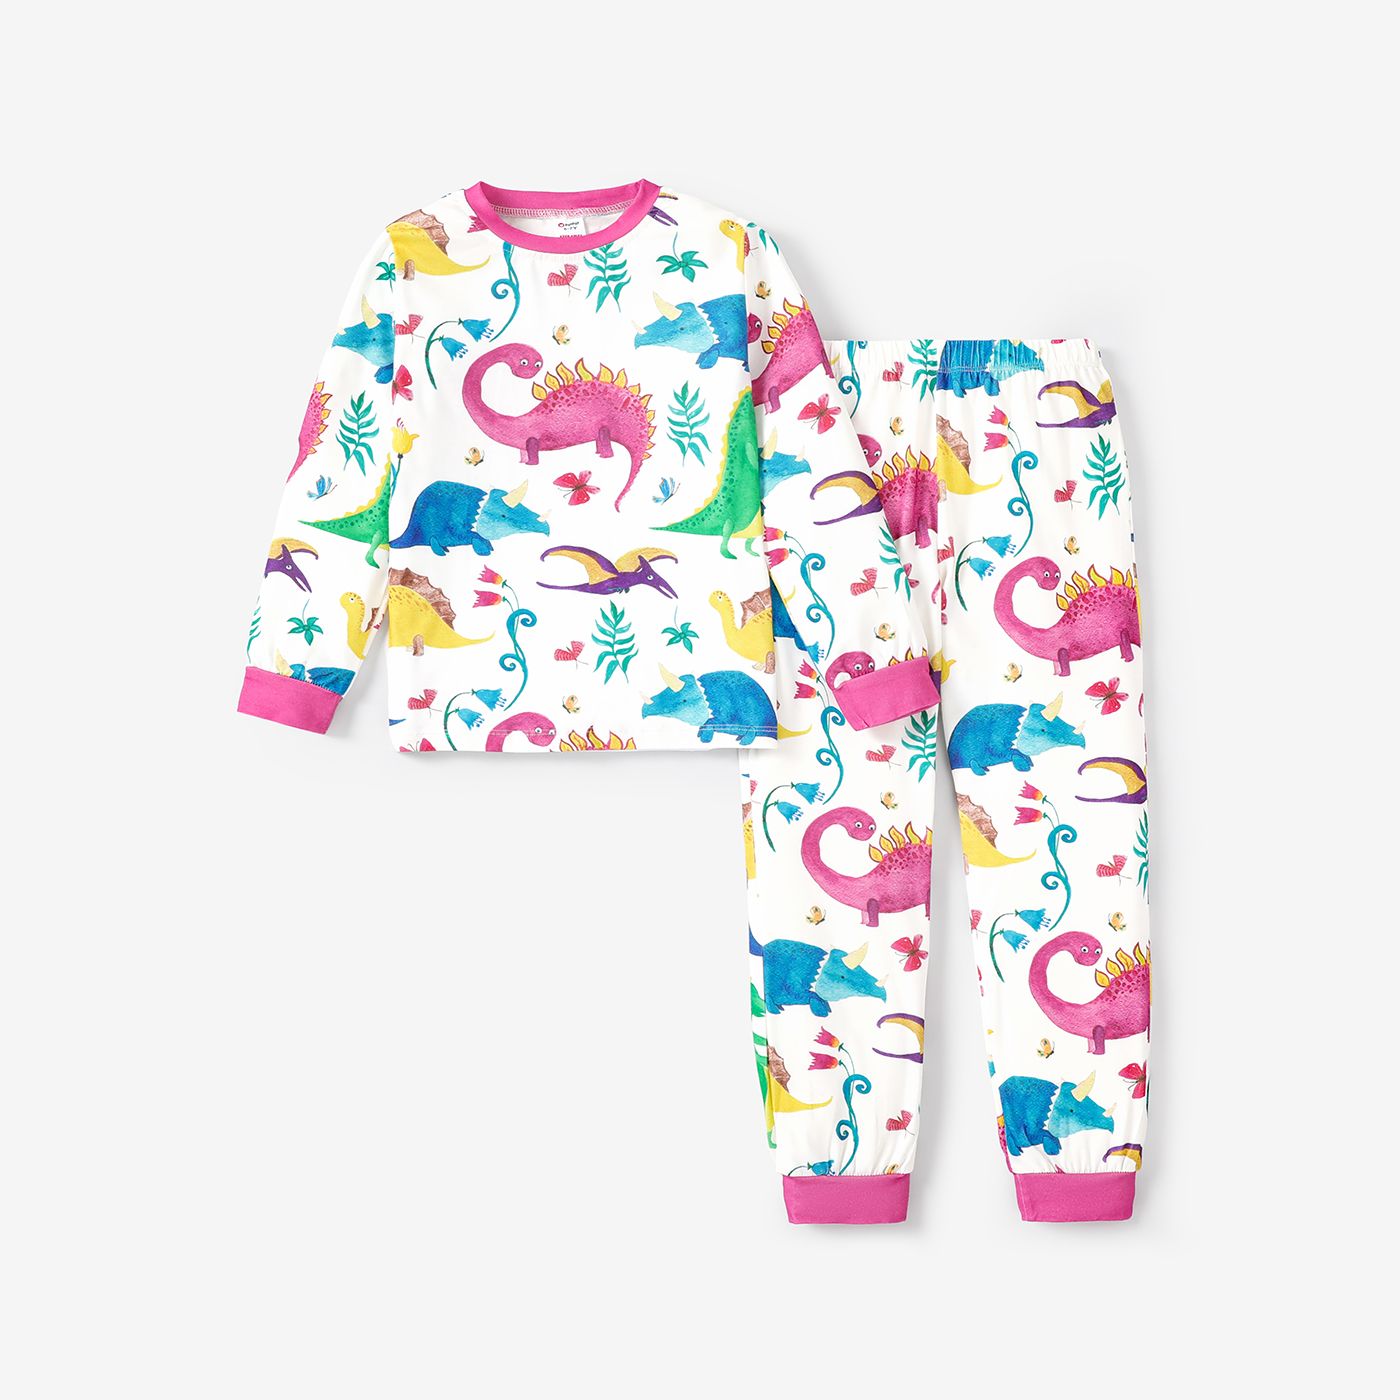 Toddler/Kid Girl Childlike Animal Pattern Home Clothes Set